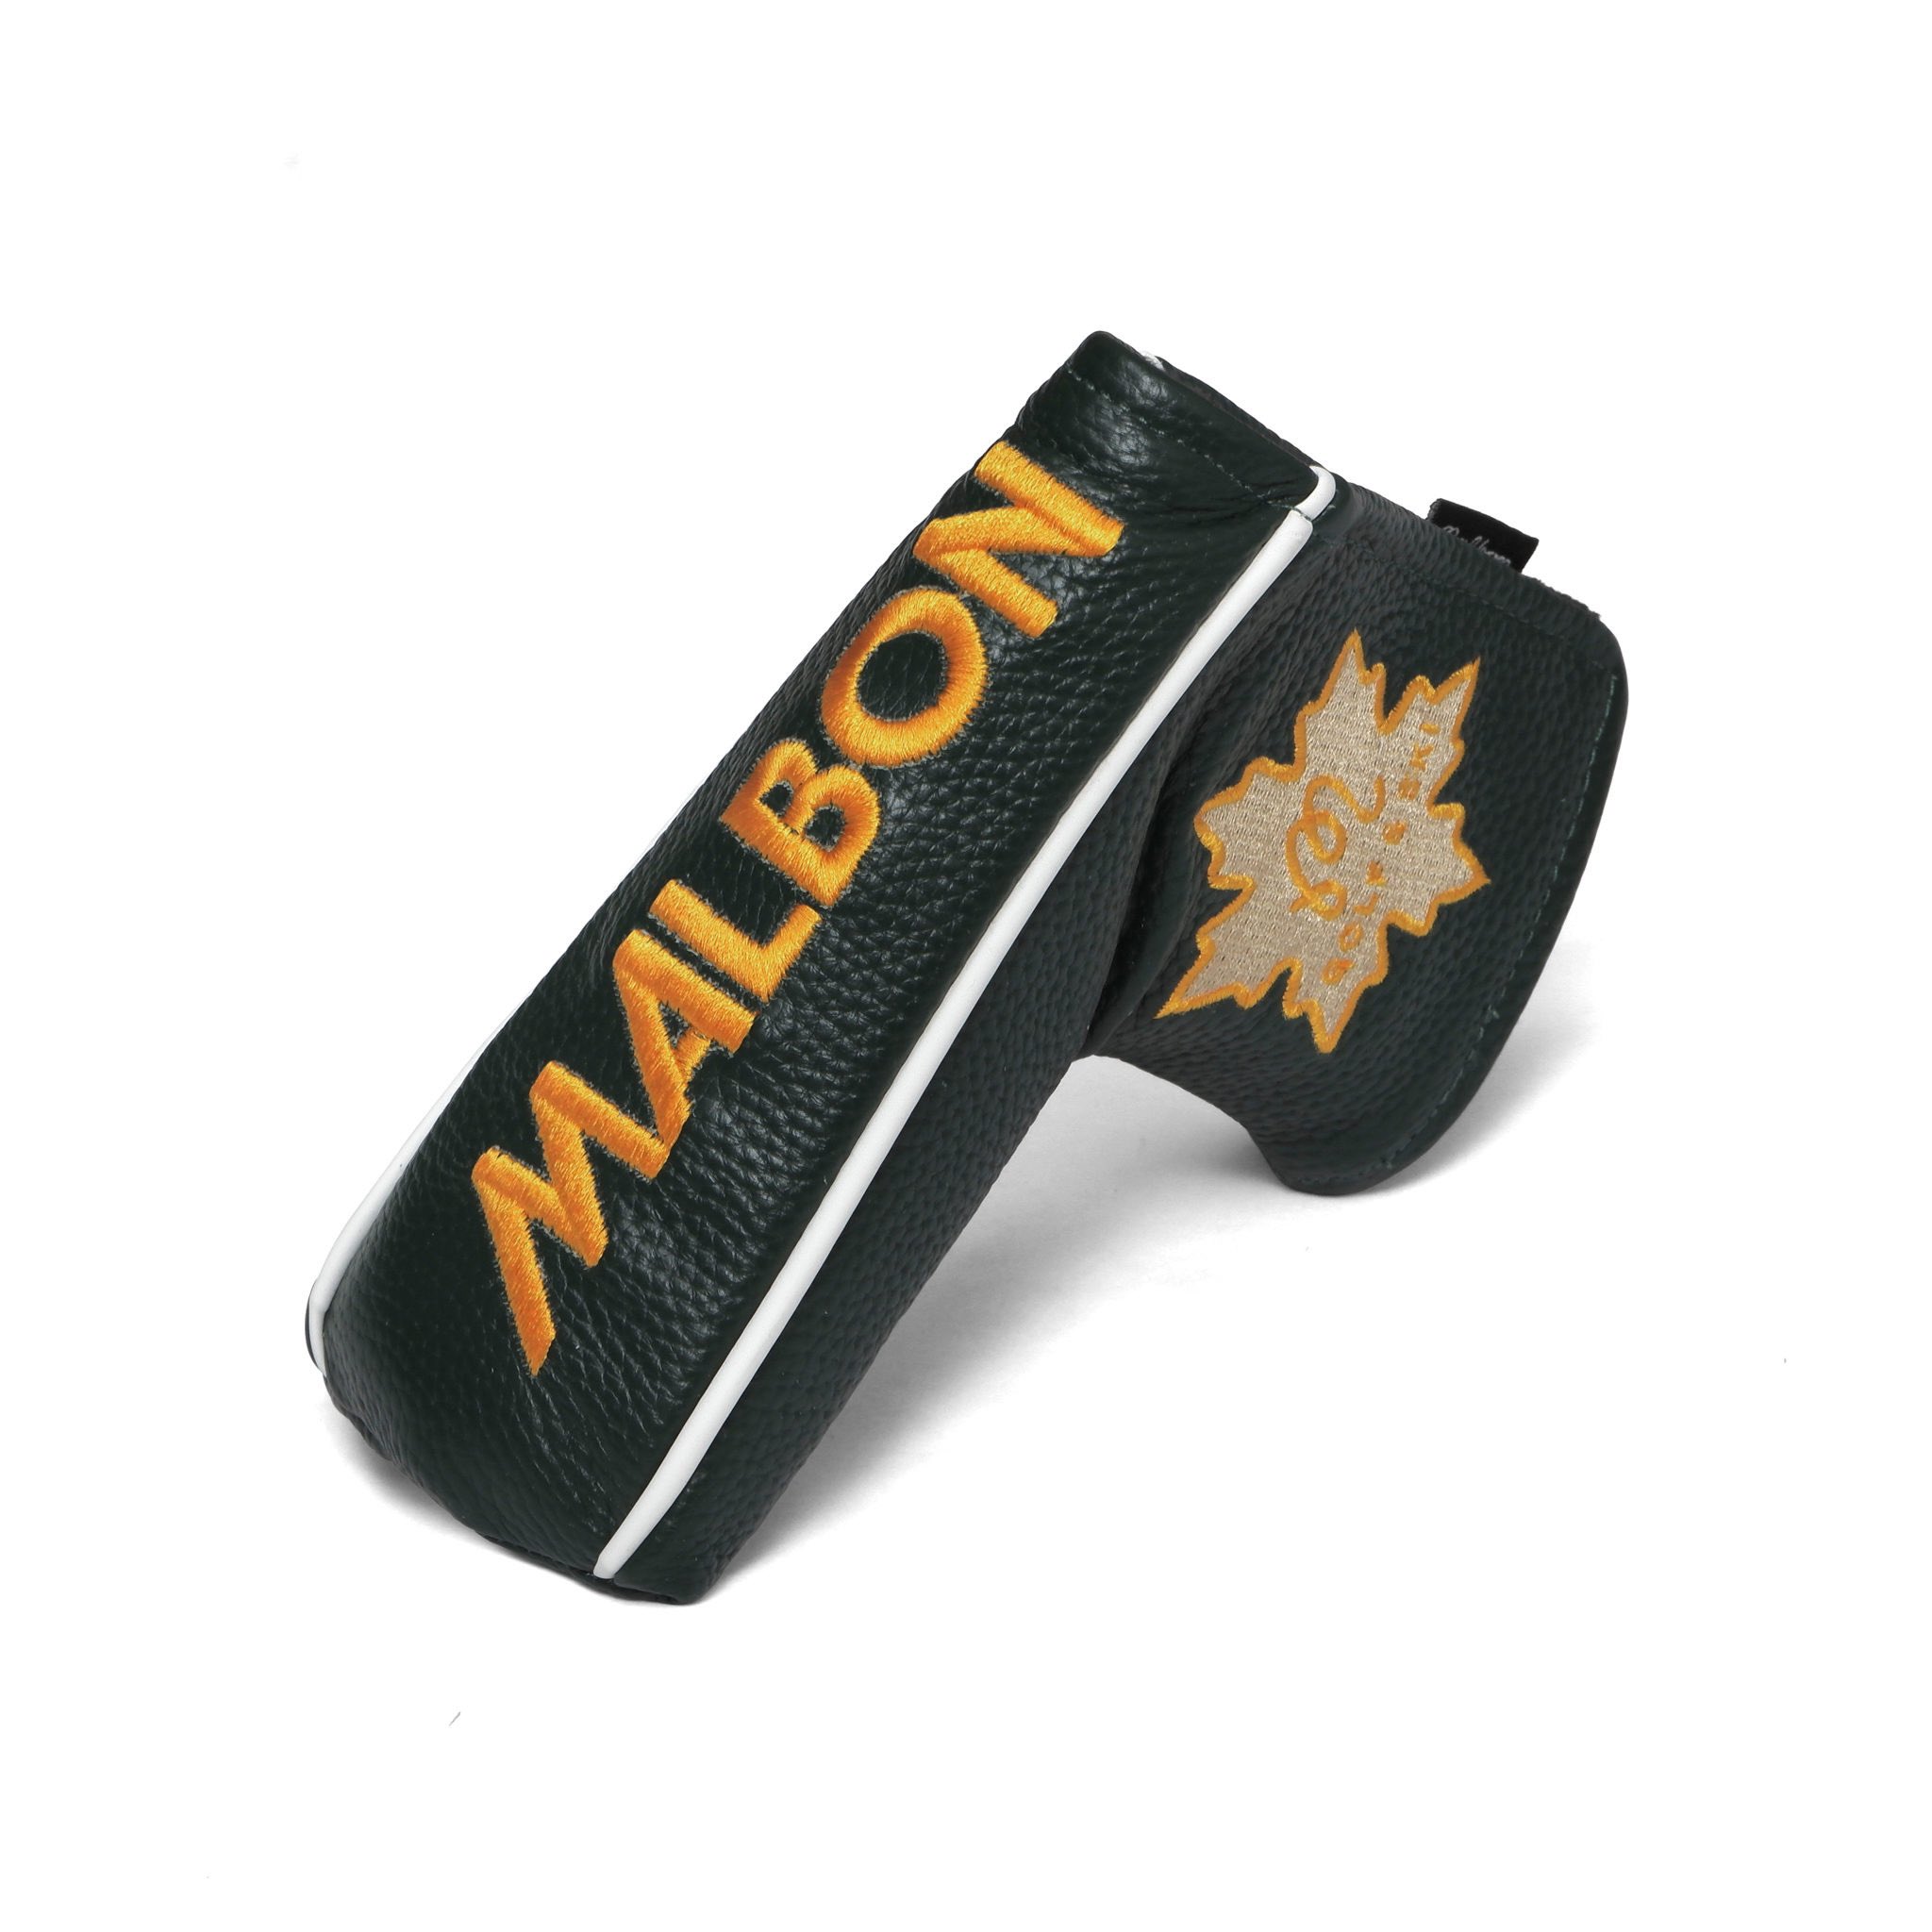 Malbon Golf (@MalbonGolf) / Twitter